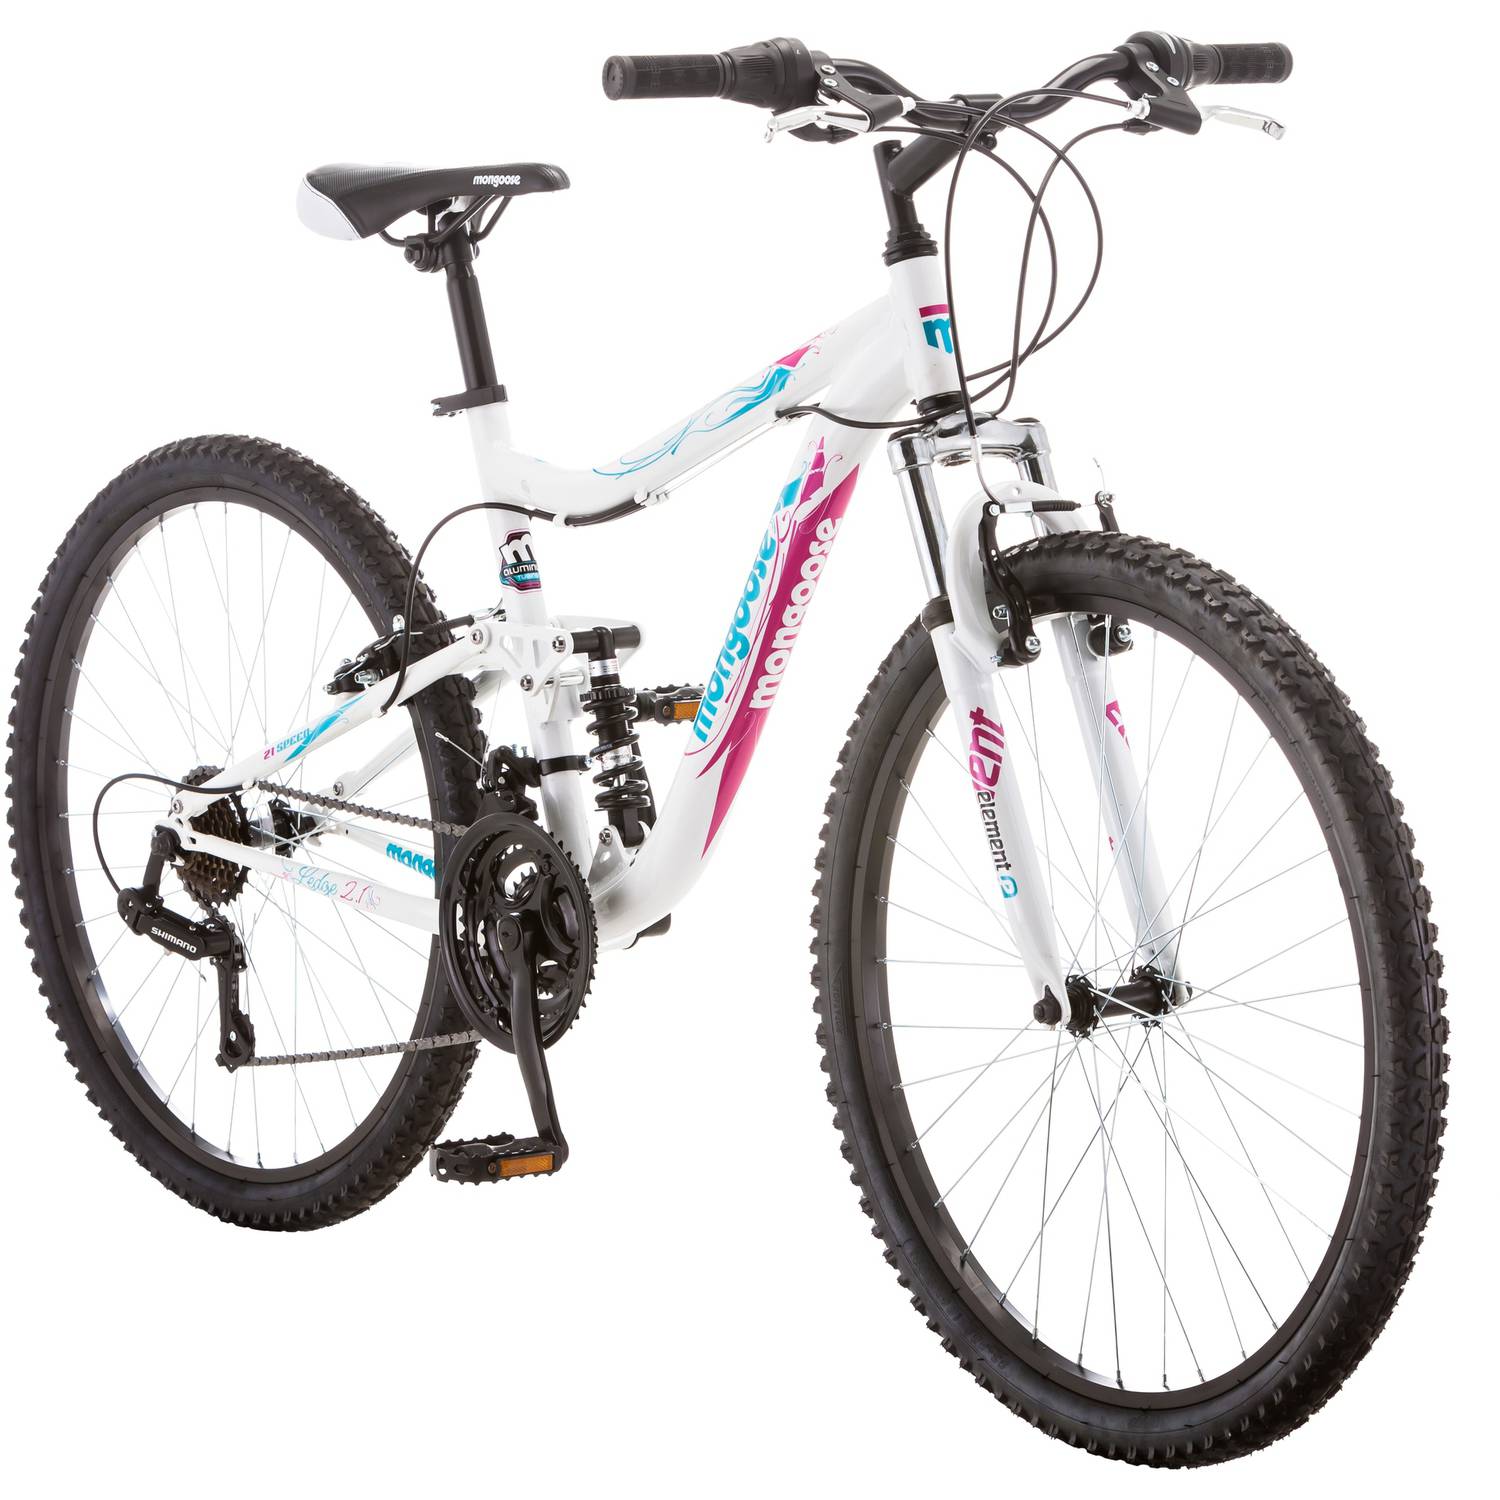 26" Mongoose Ledge 2.1 Women's Mountain Bike, White/Purple - image 1 of 3